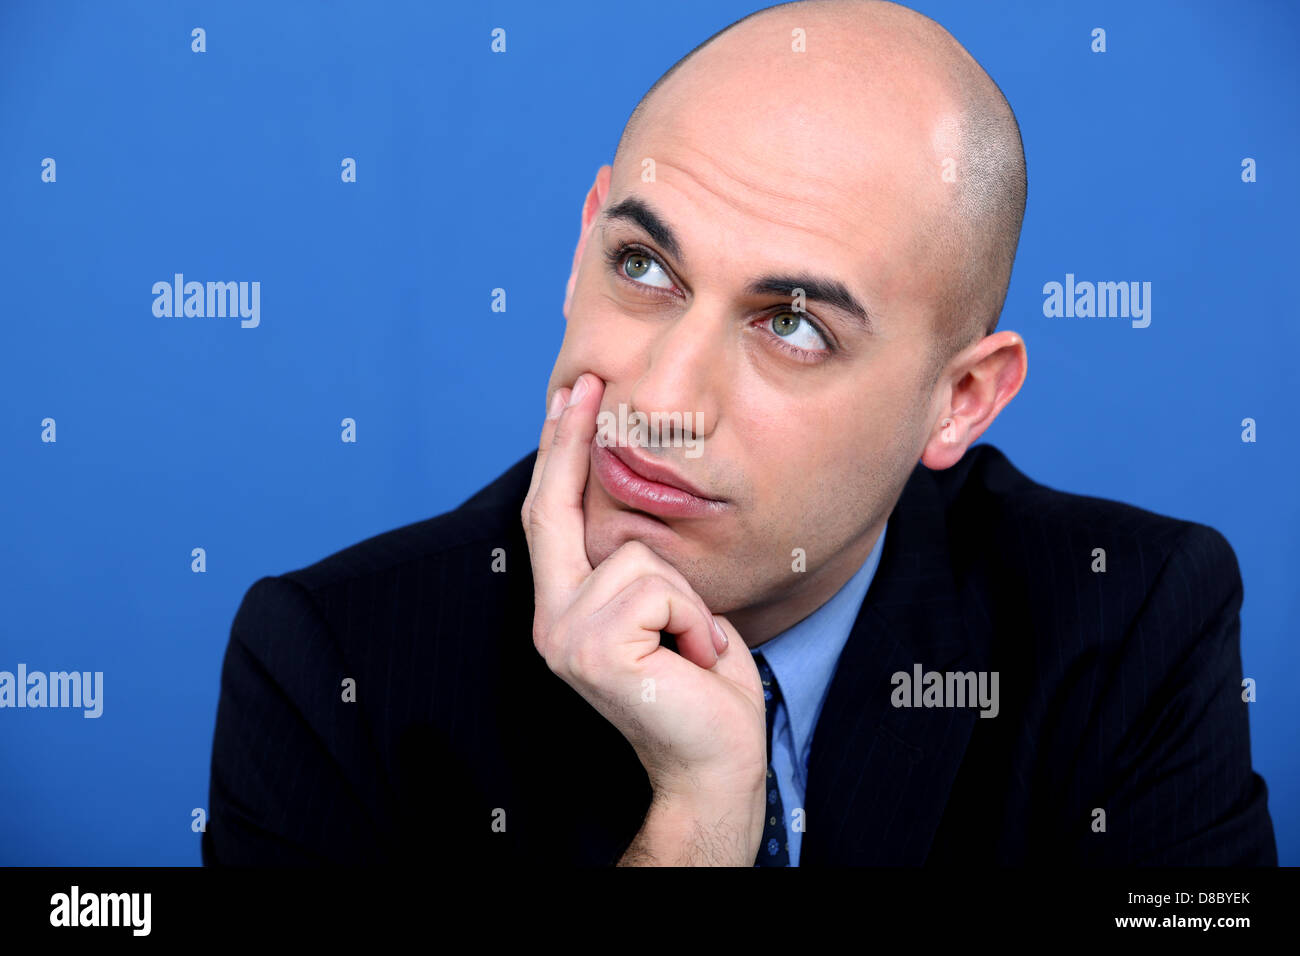 Pensive bald man Stock Photo